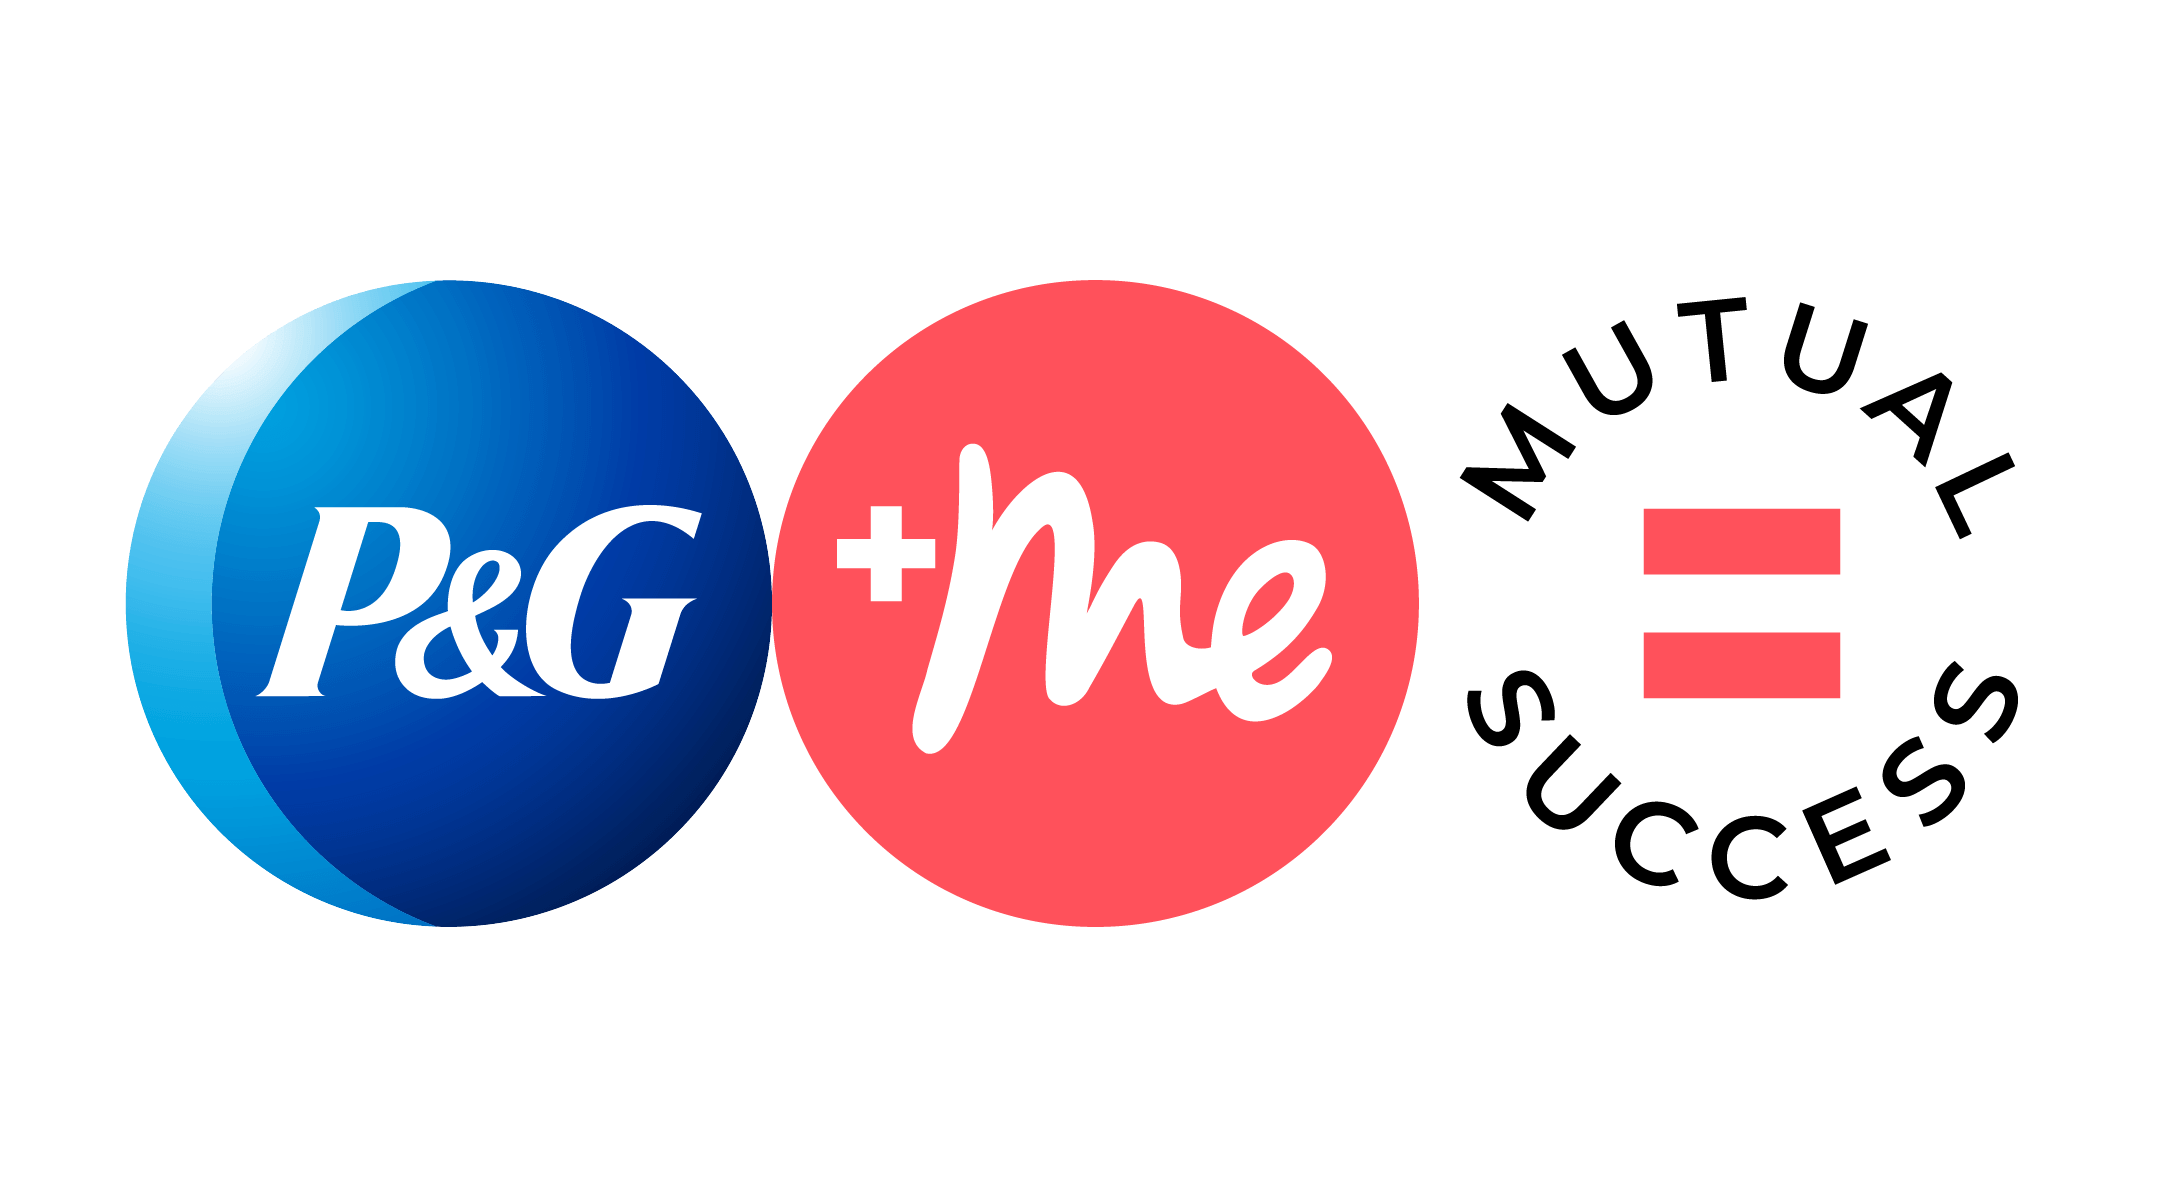 A logo that reads “P&G + Me = Mutual Success.”